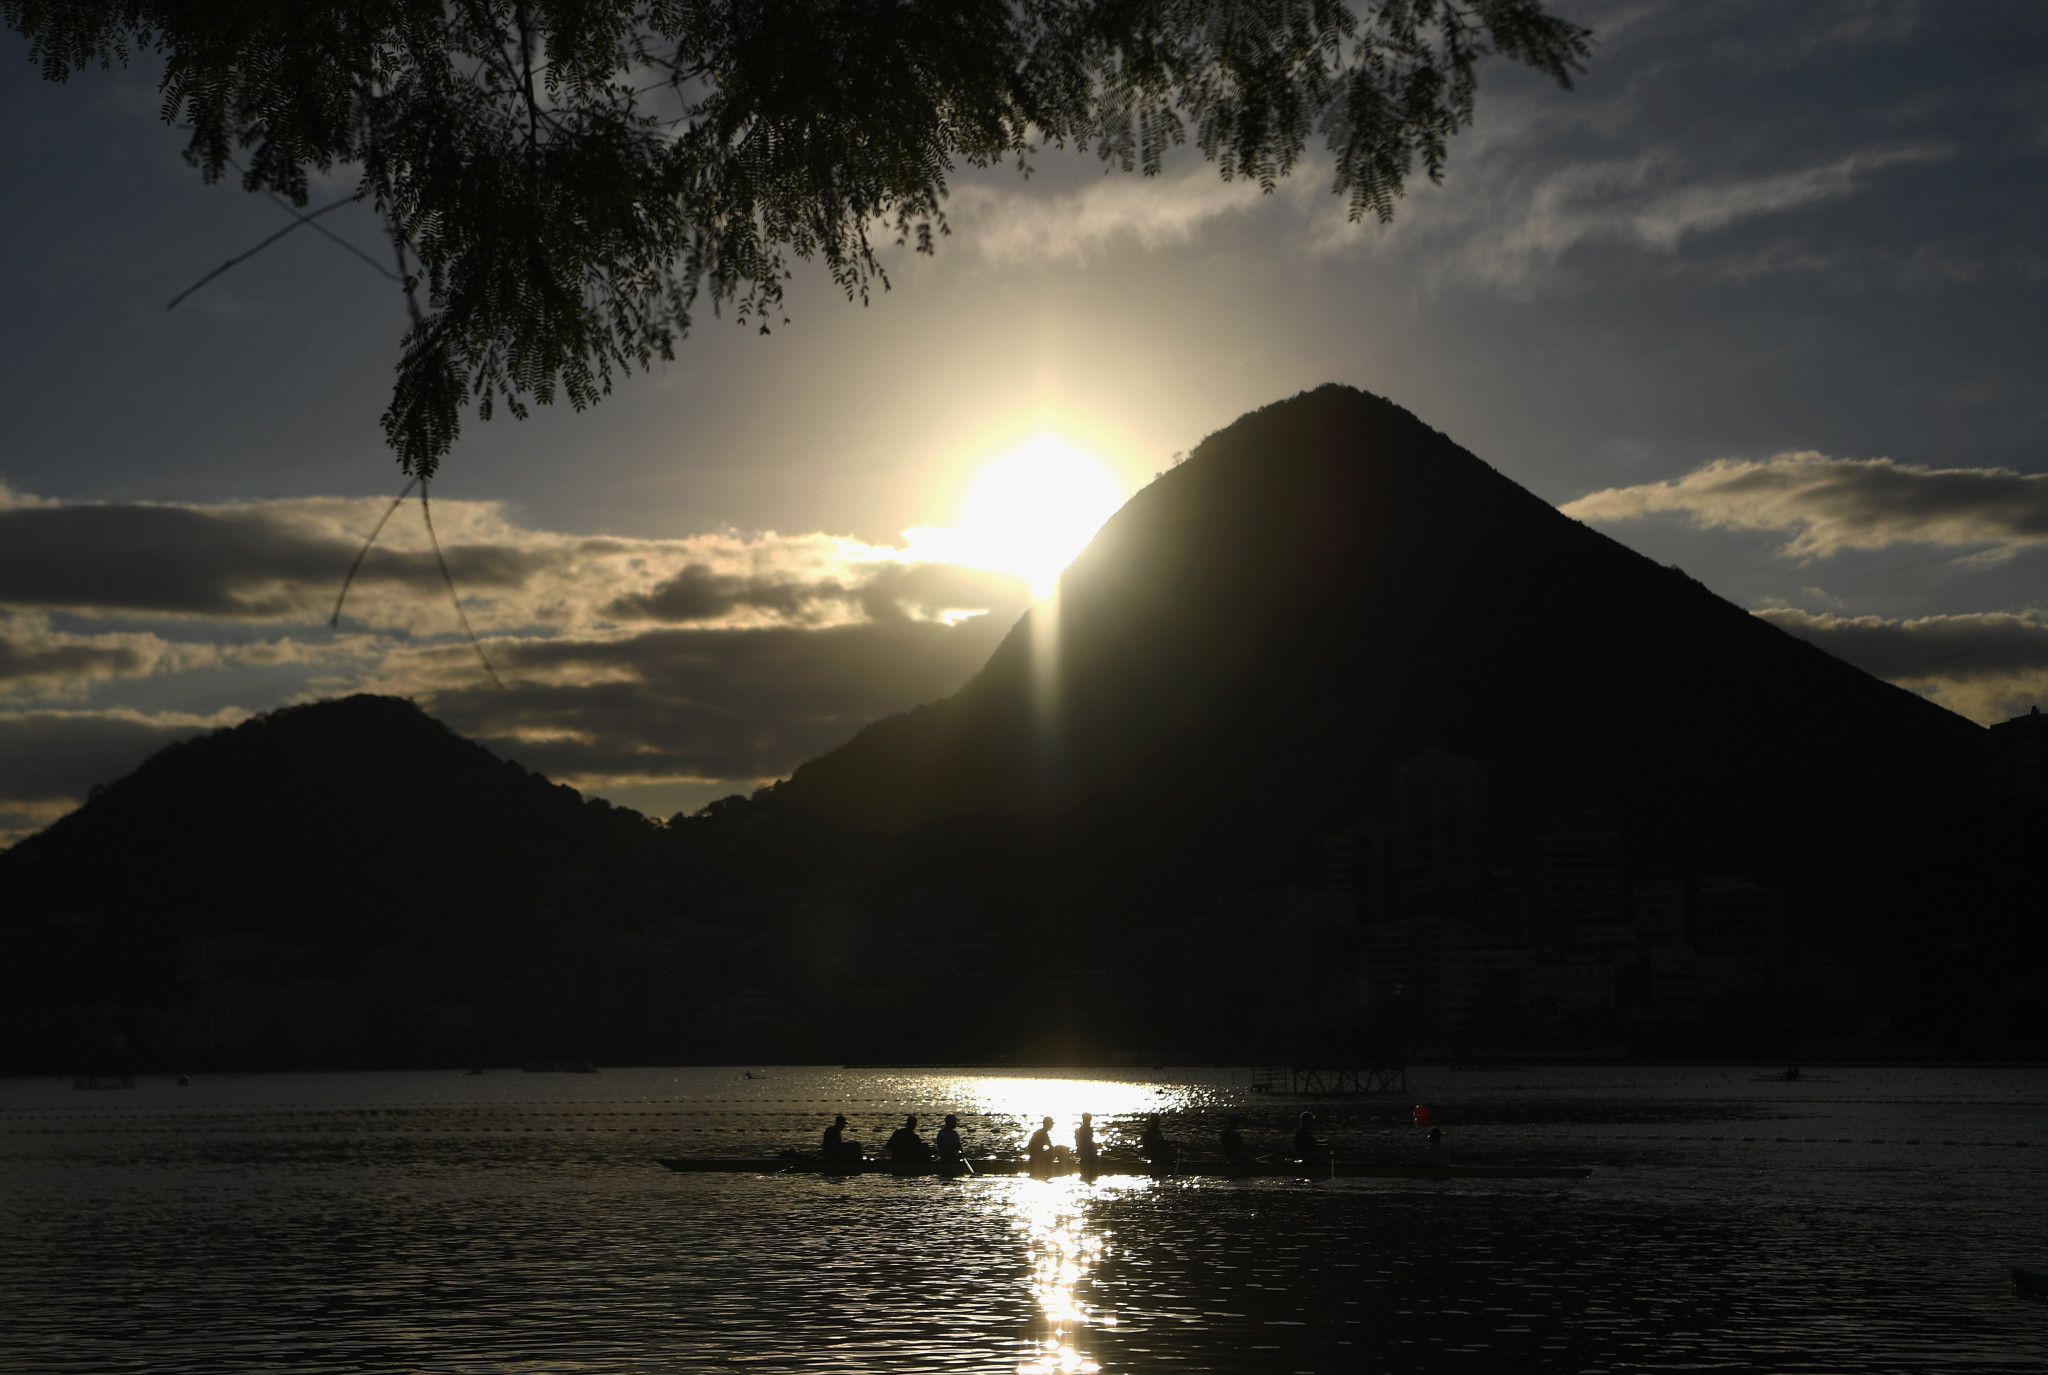 World Rowing postpones Americas Tokyo 2020 qualification regatta